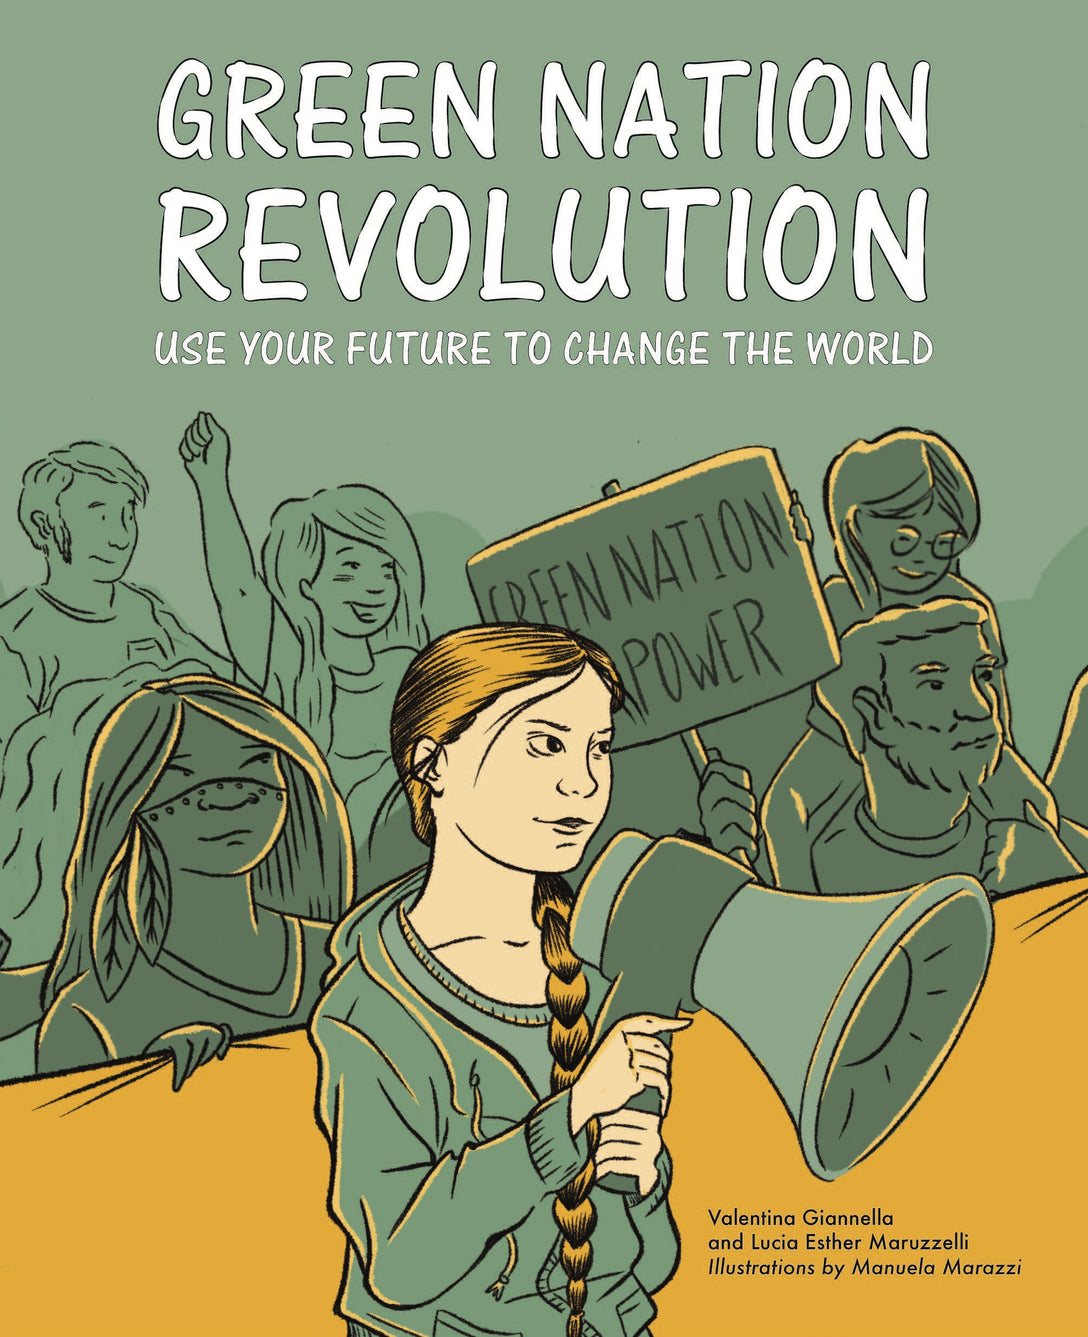 Green Nation Revolution by Valentina Giannella, Lucia Esther Maruzzelli, Manuela Marazzi